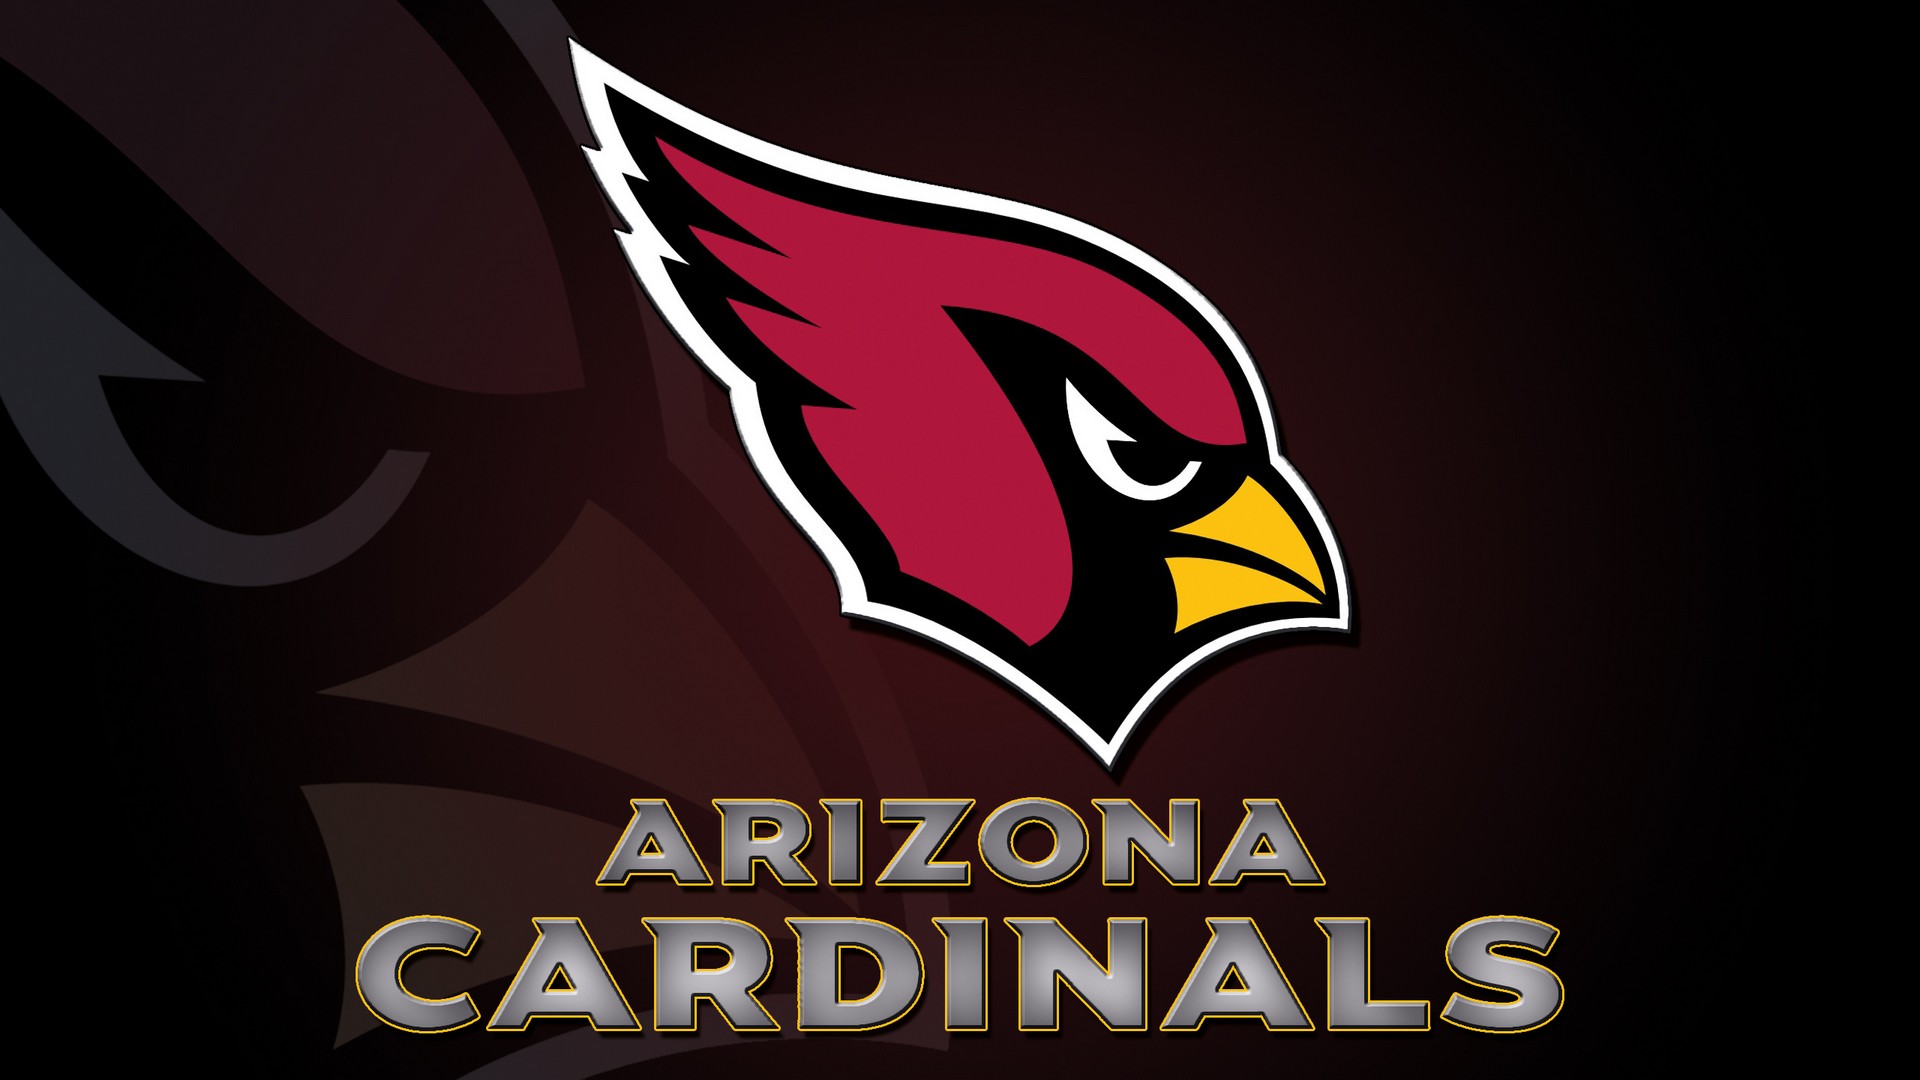 Arizona Cardinals Wallpaper HD Nfl Football